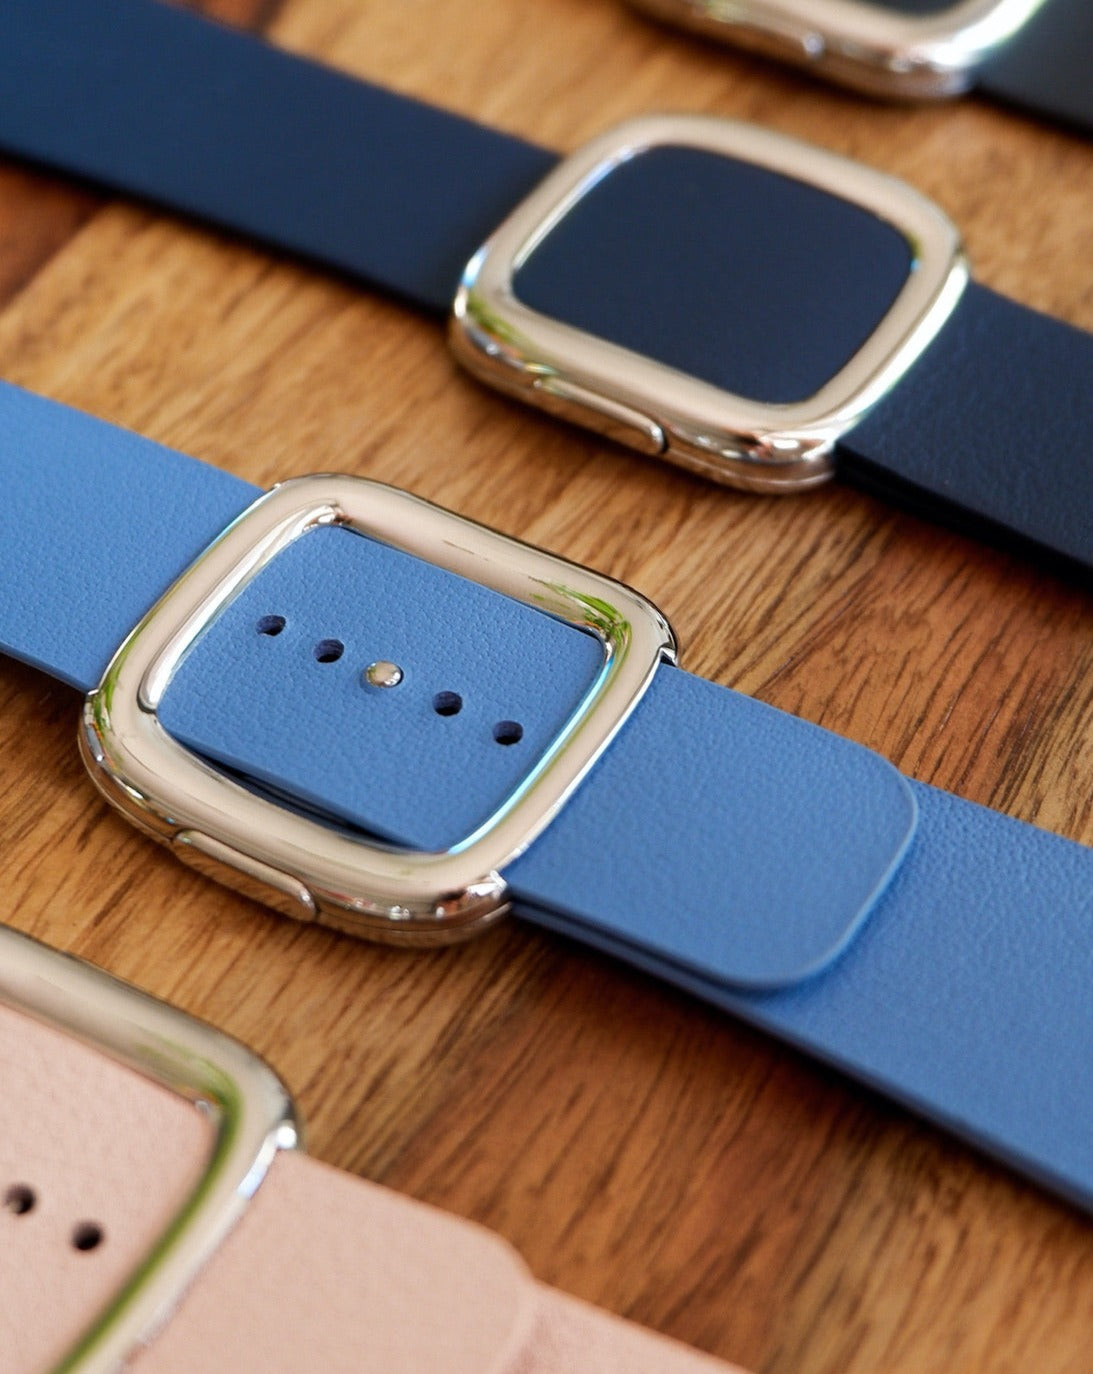 Magnetic Buckle, Modern Buckle Deep Sea | Modernes Lederarmband für Apple Watch (Blau)-Apple Watch Armbänder kaufen #farbe_deep sea